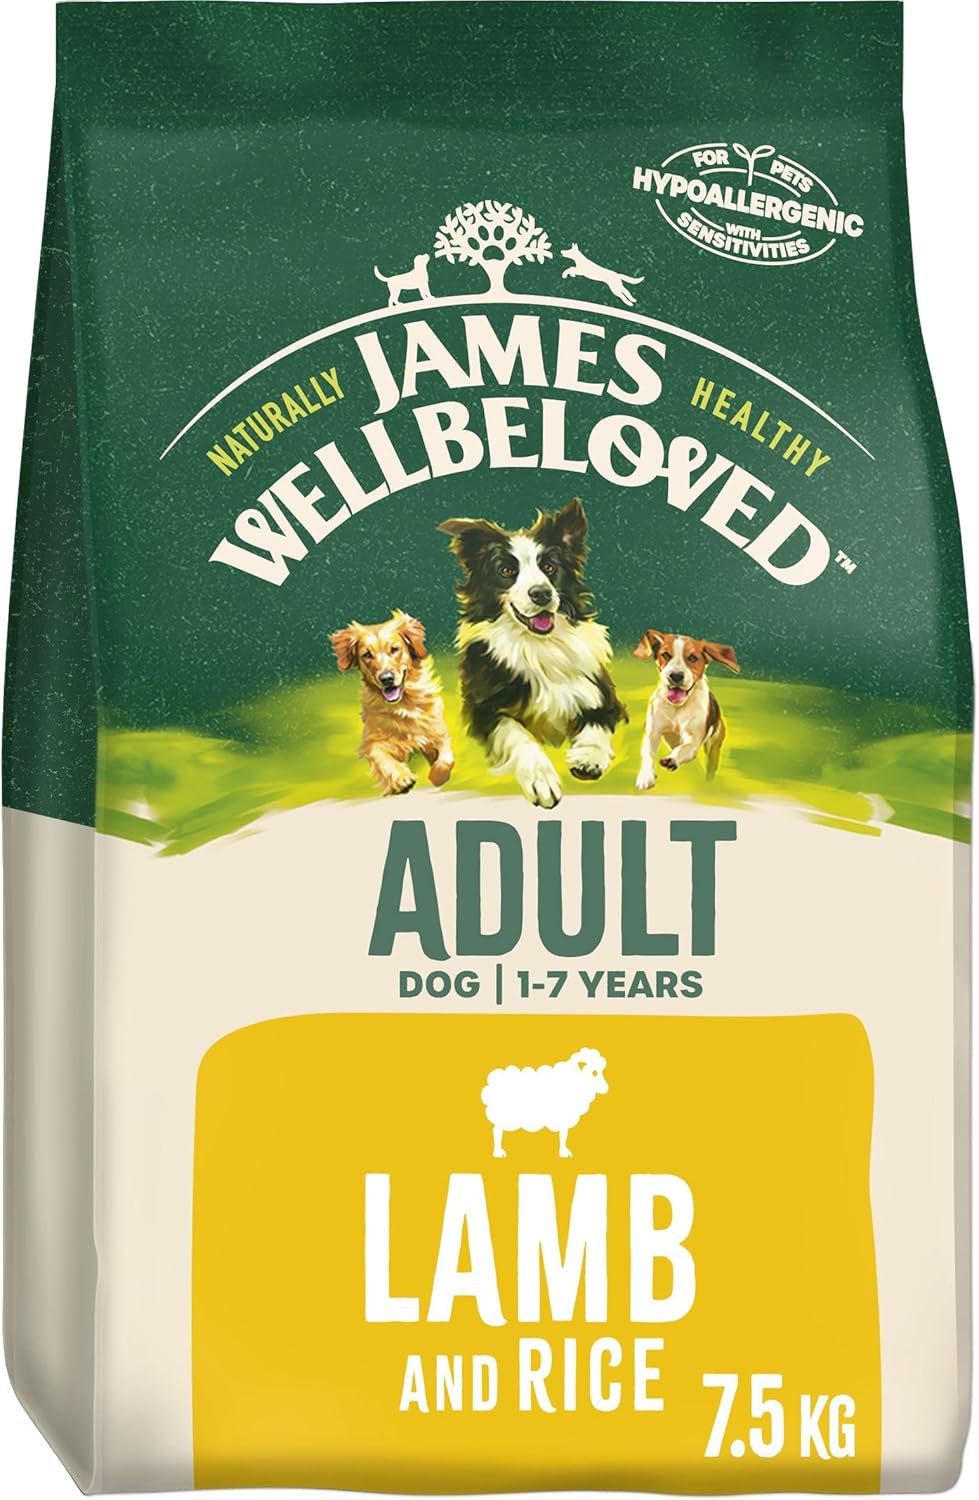 James Wellbeloved Complete Dry Adult Dog Food Lamb and Rice, 7.5 kg?02JA3